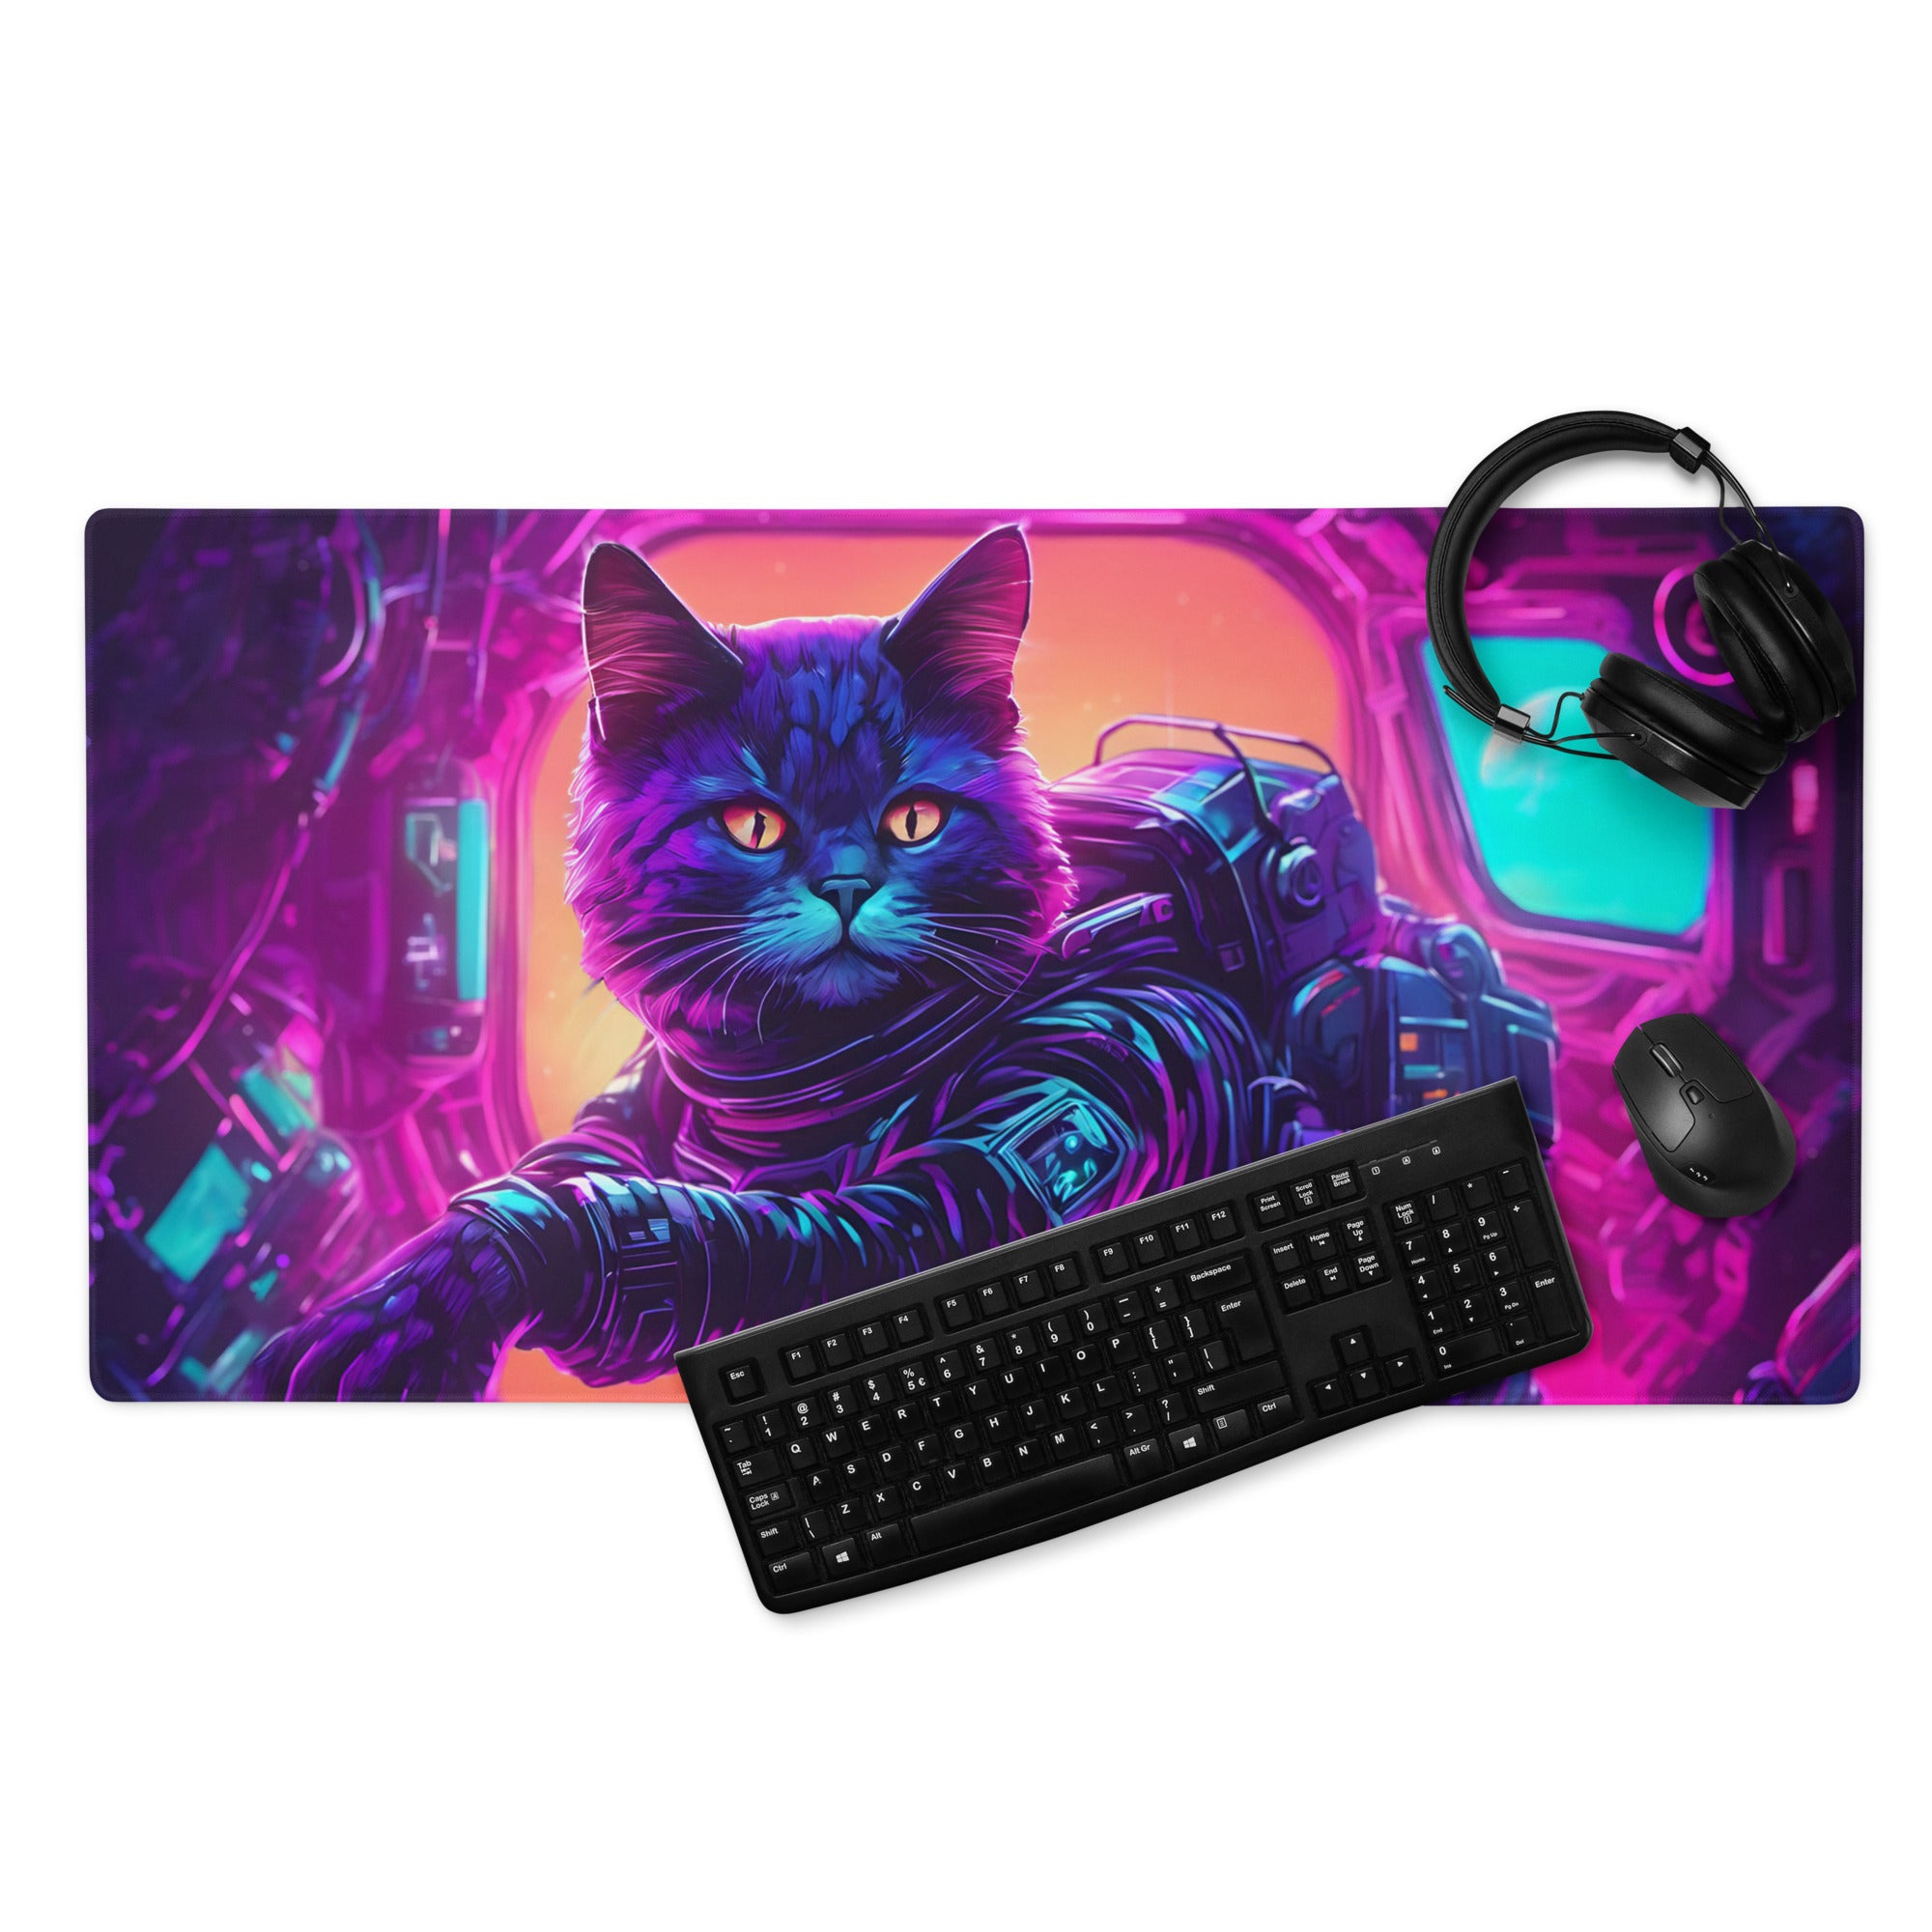 Deskmat | Space Cat Desk Mat SC-3 | Gaming Pad For Laptop Computer |  High Quality Print